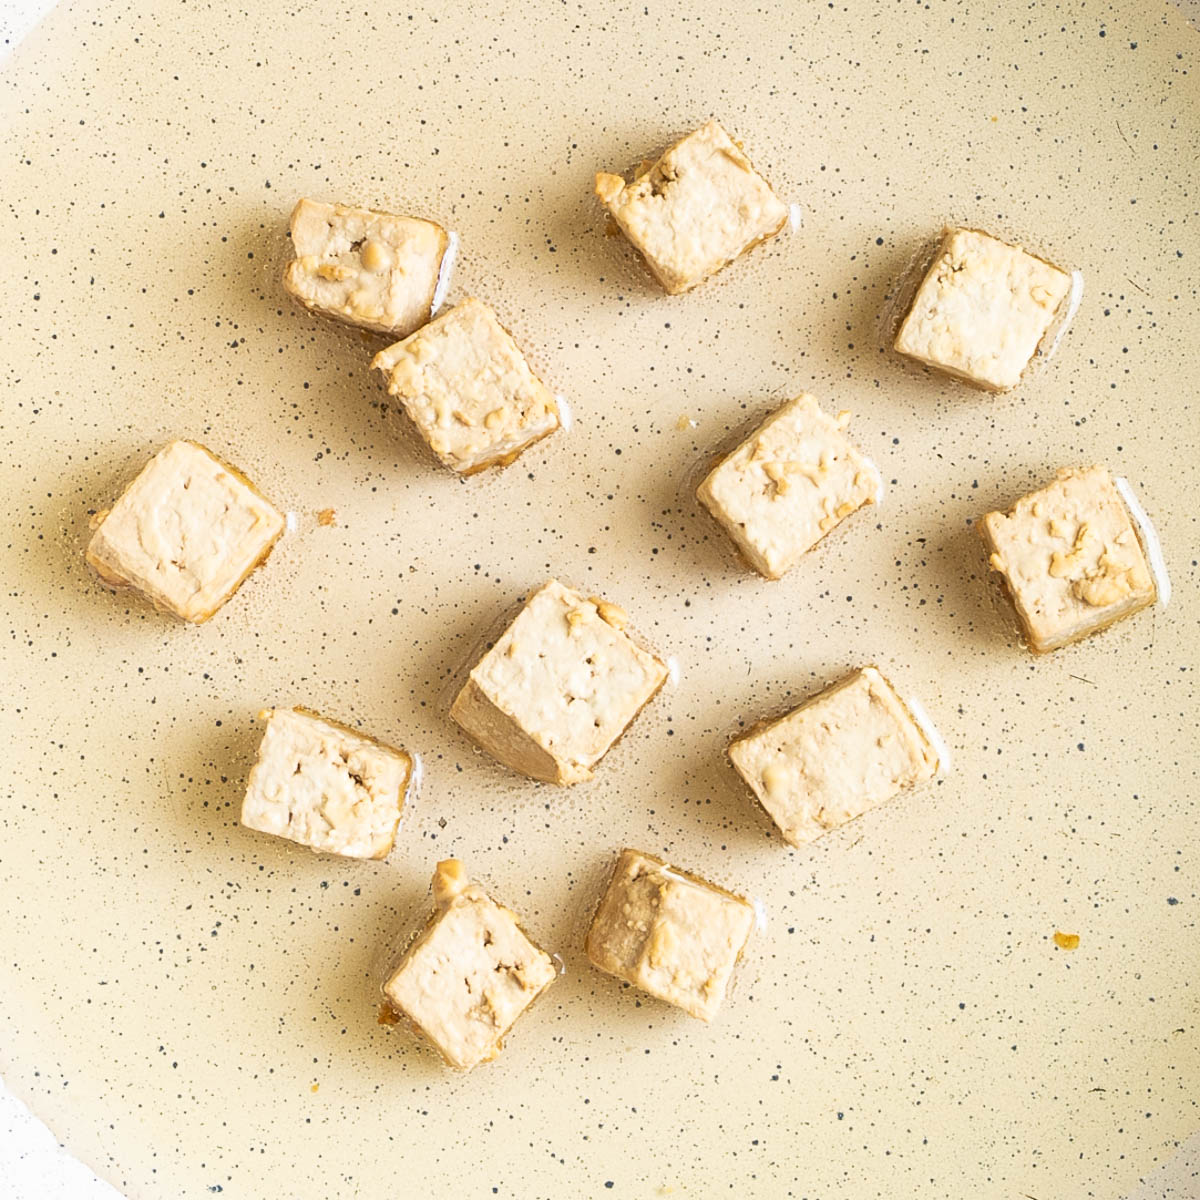 Light brown tofu cubes in a frying pan